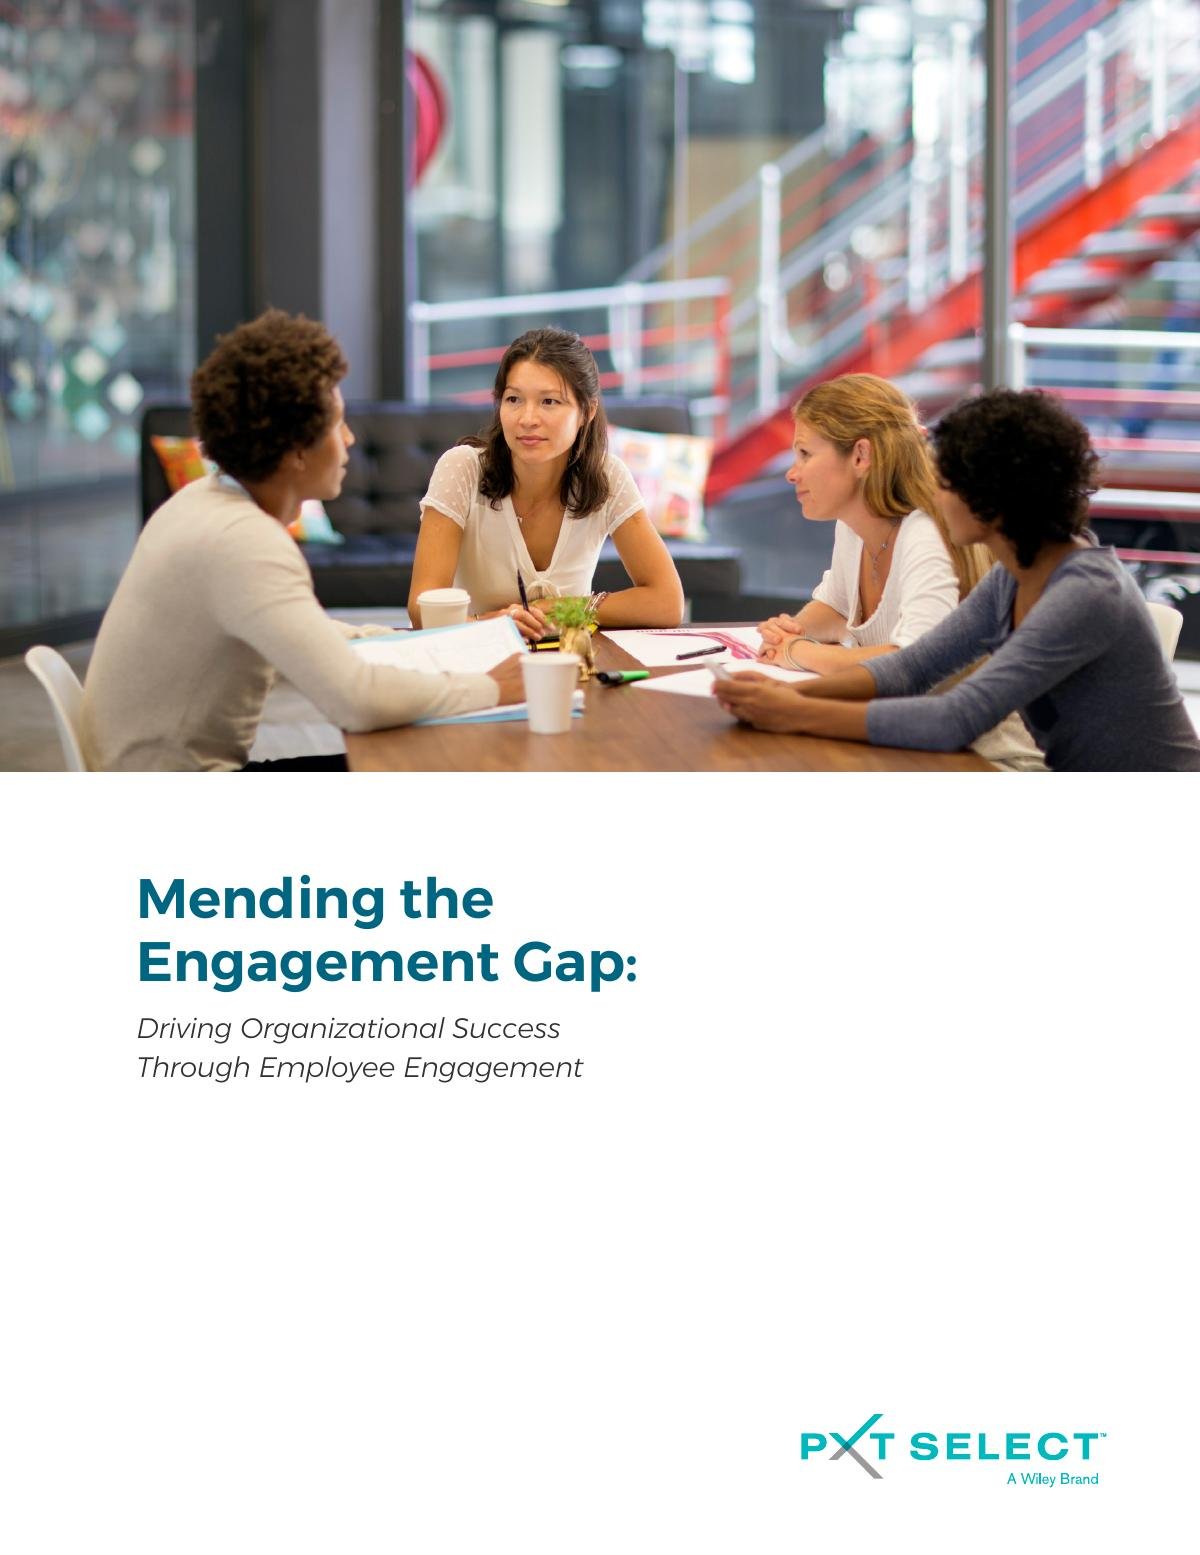 Mending the Engagement Gap: Driving Organizational Success Through Employee Engagement